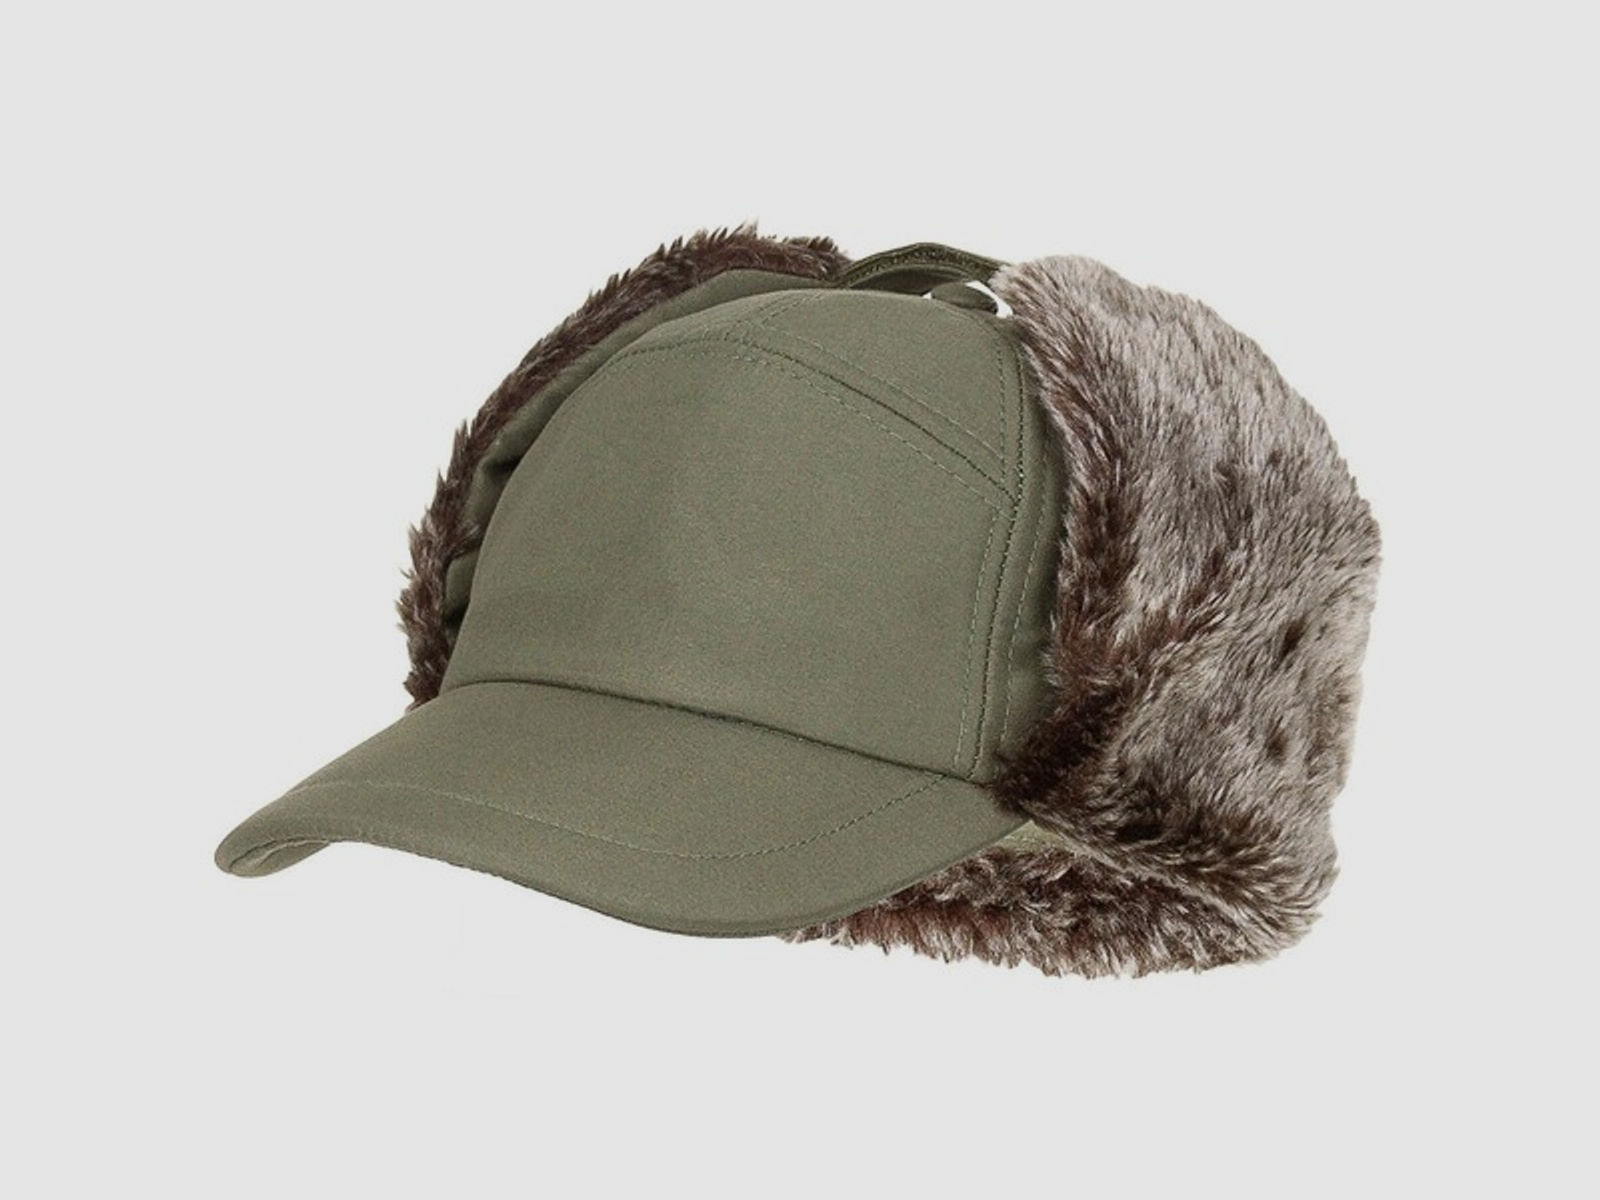 Winter Cap / Mütze "Trapper" mit Ohrenklappen + Kunstfell - Unigröße - Oliv